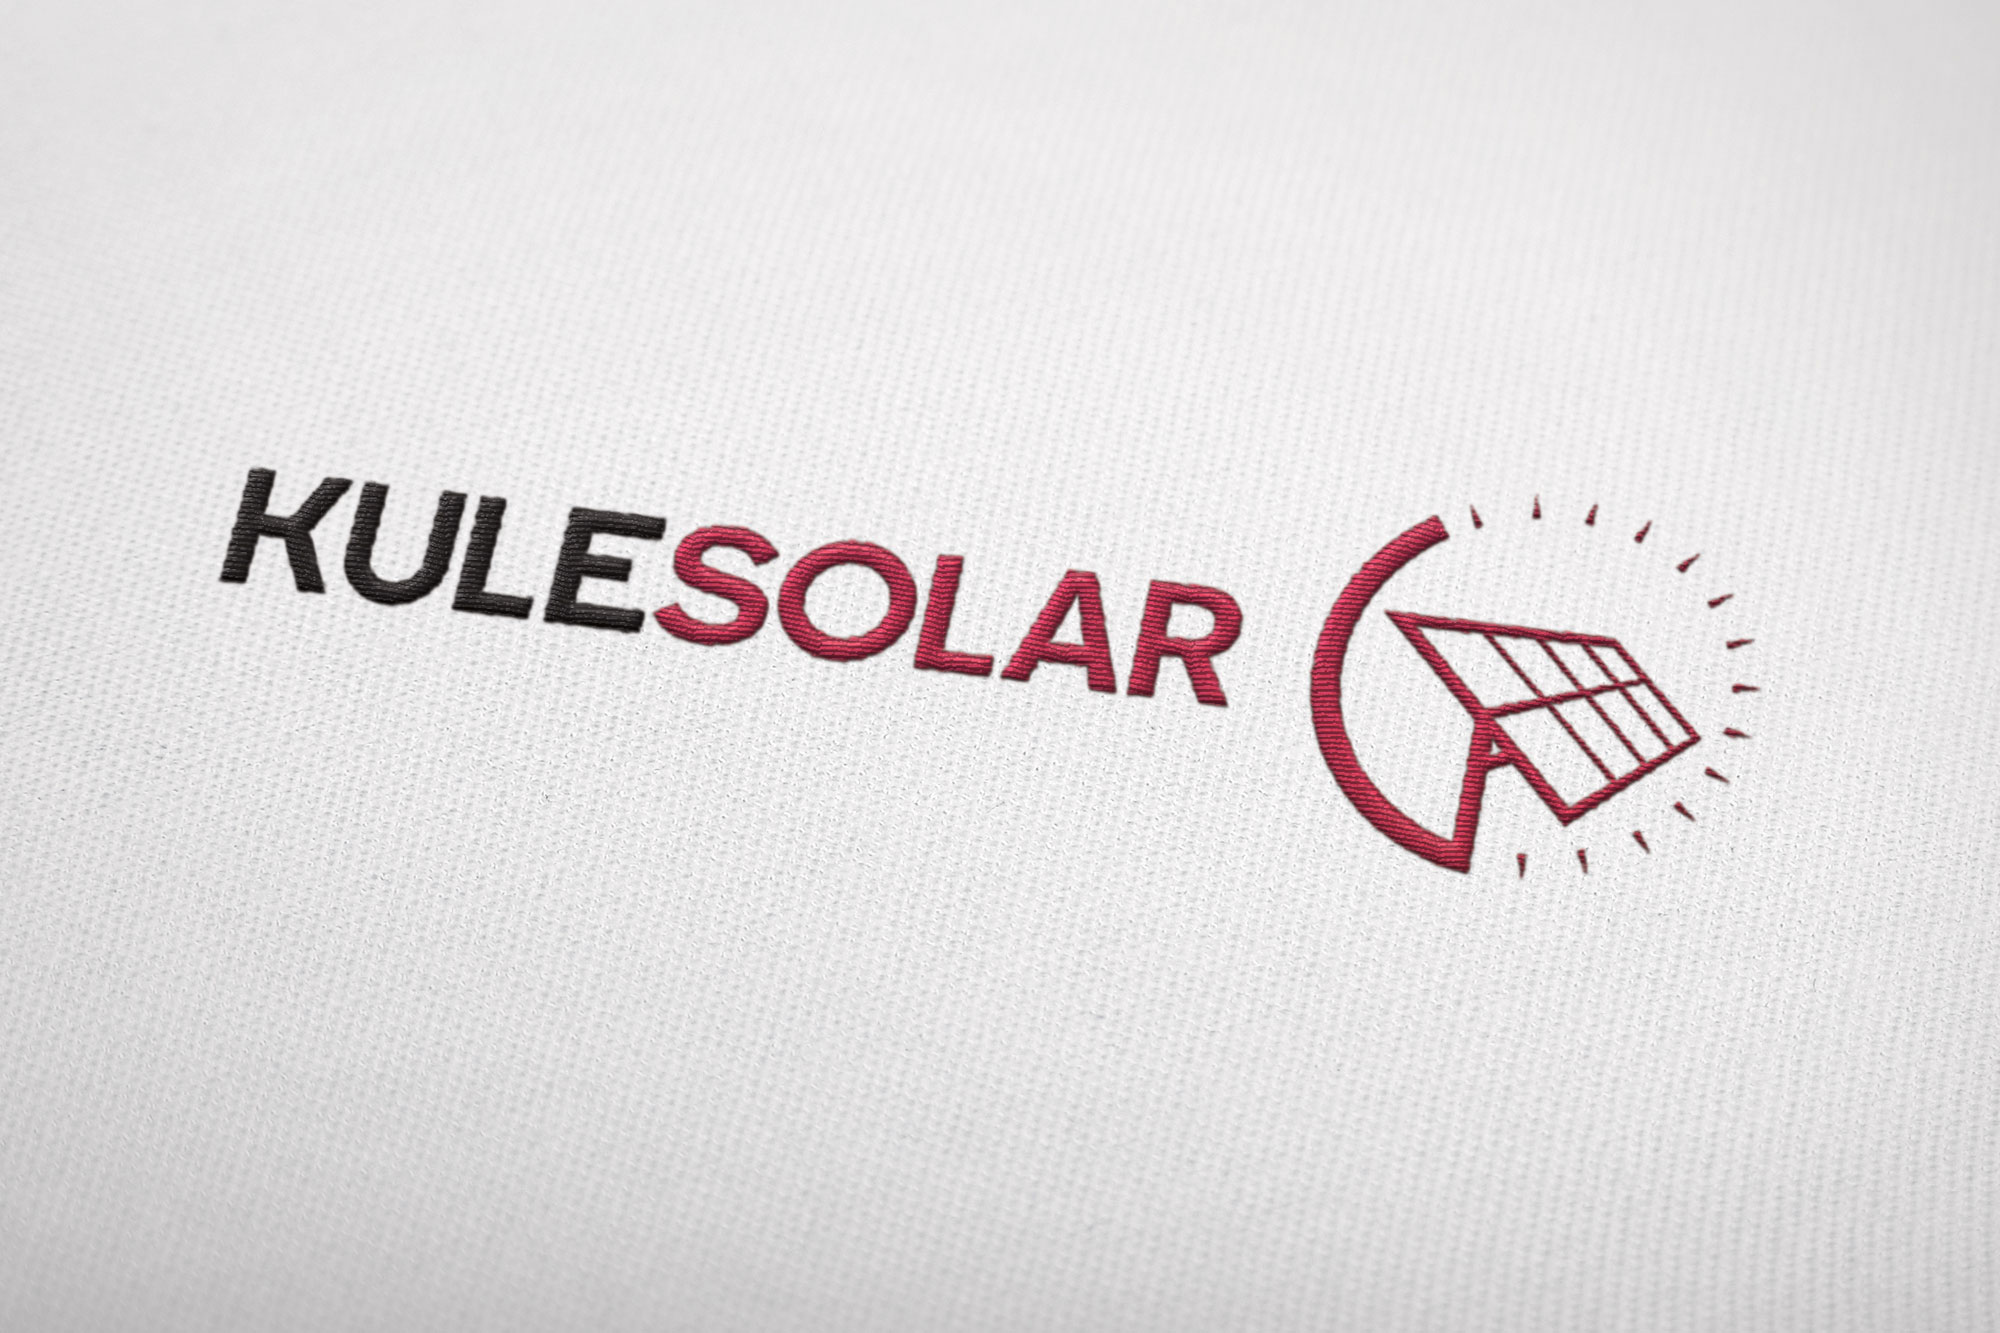 Kule Solar Logo and Corporate ID